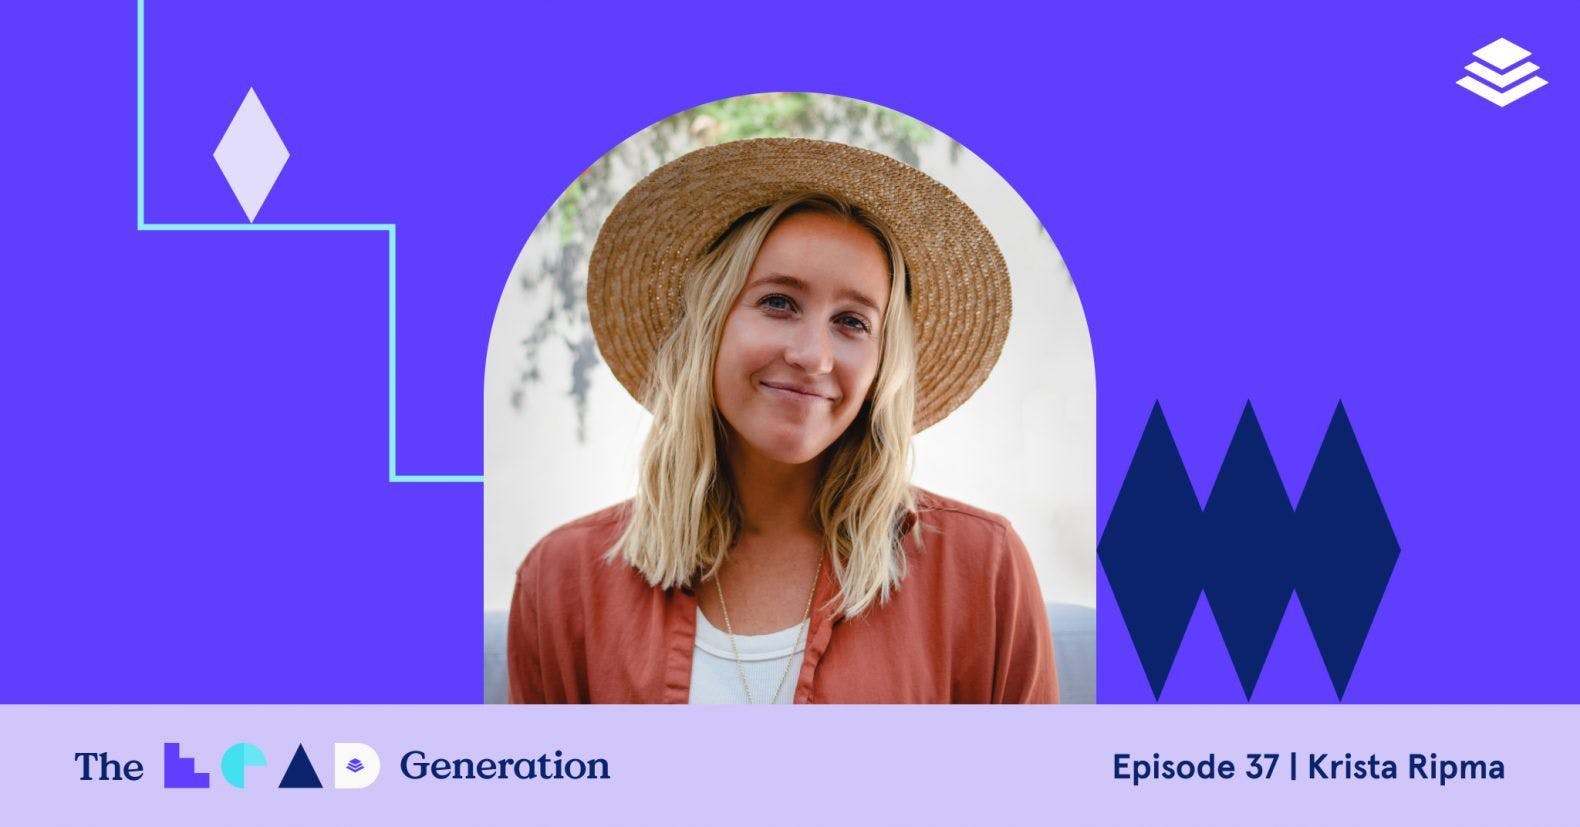 The Lead Generation Podcast Episode 37: Krista Ripma